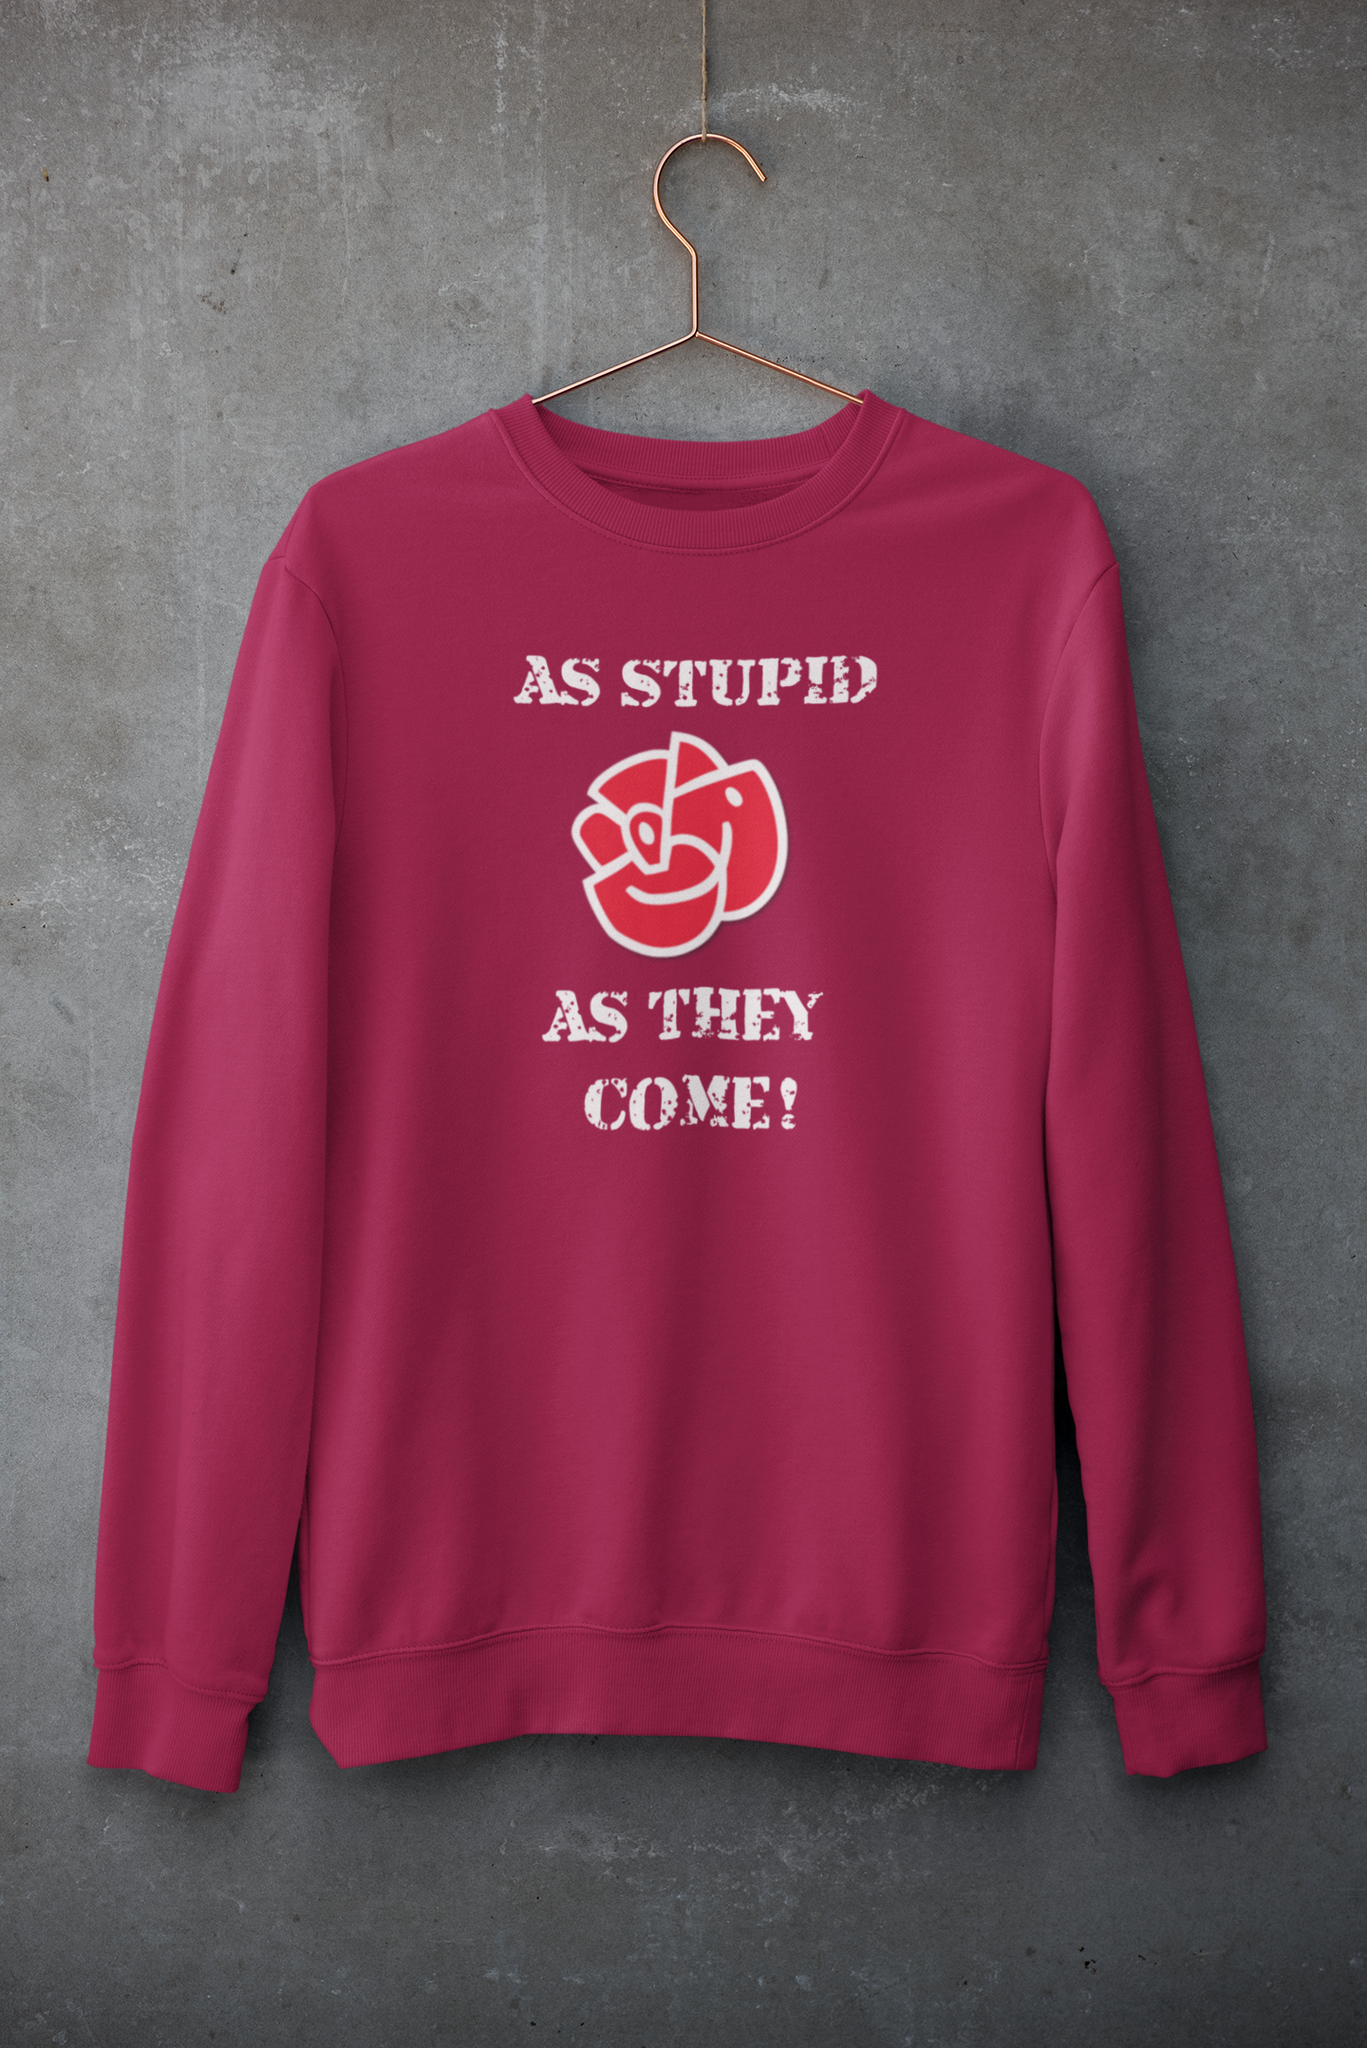 Socialdemokraterna As Stupid As They Come! Sweatshirt Unisex